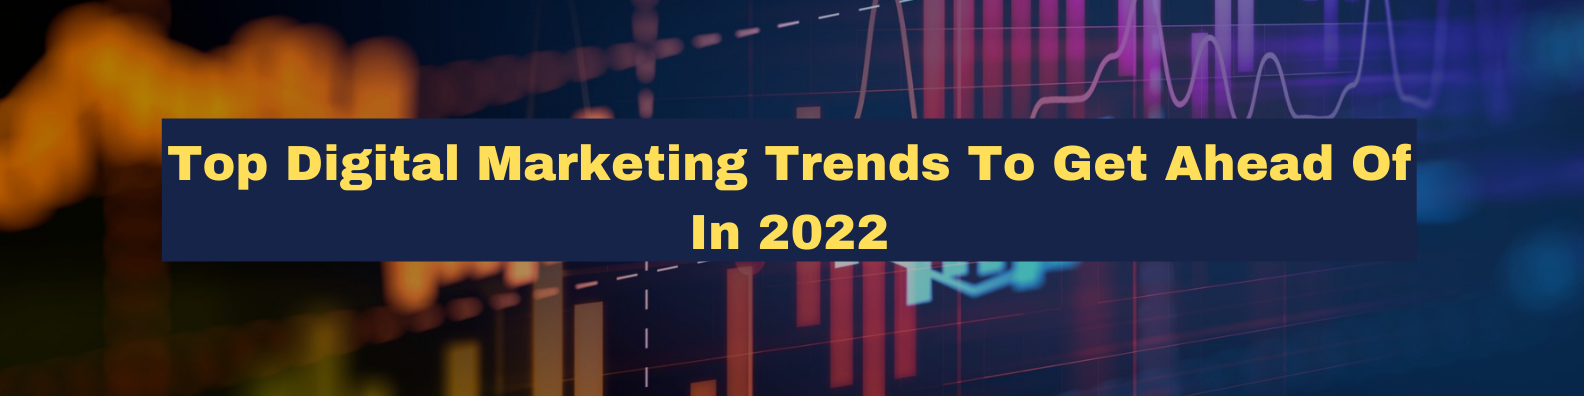 Top Digital Marketing Trends To Get Ahead Of In 2022